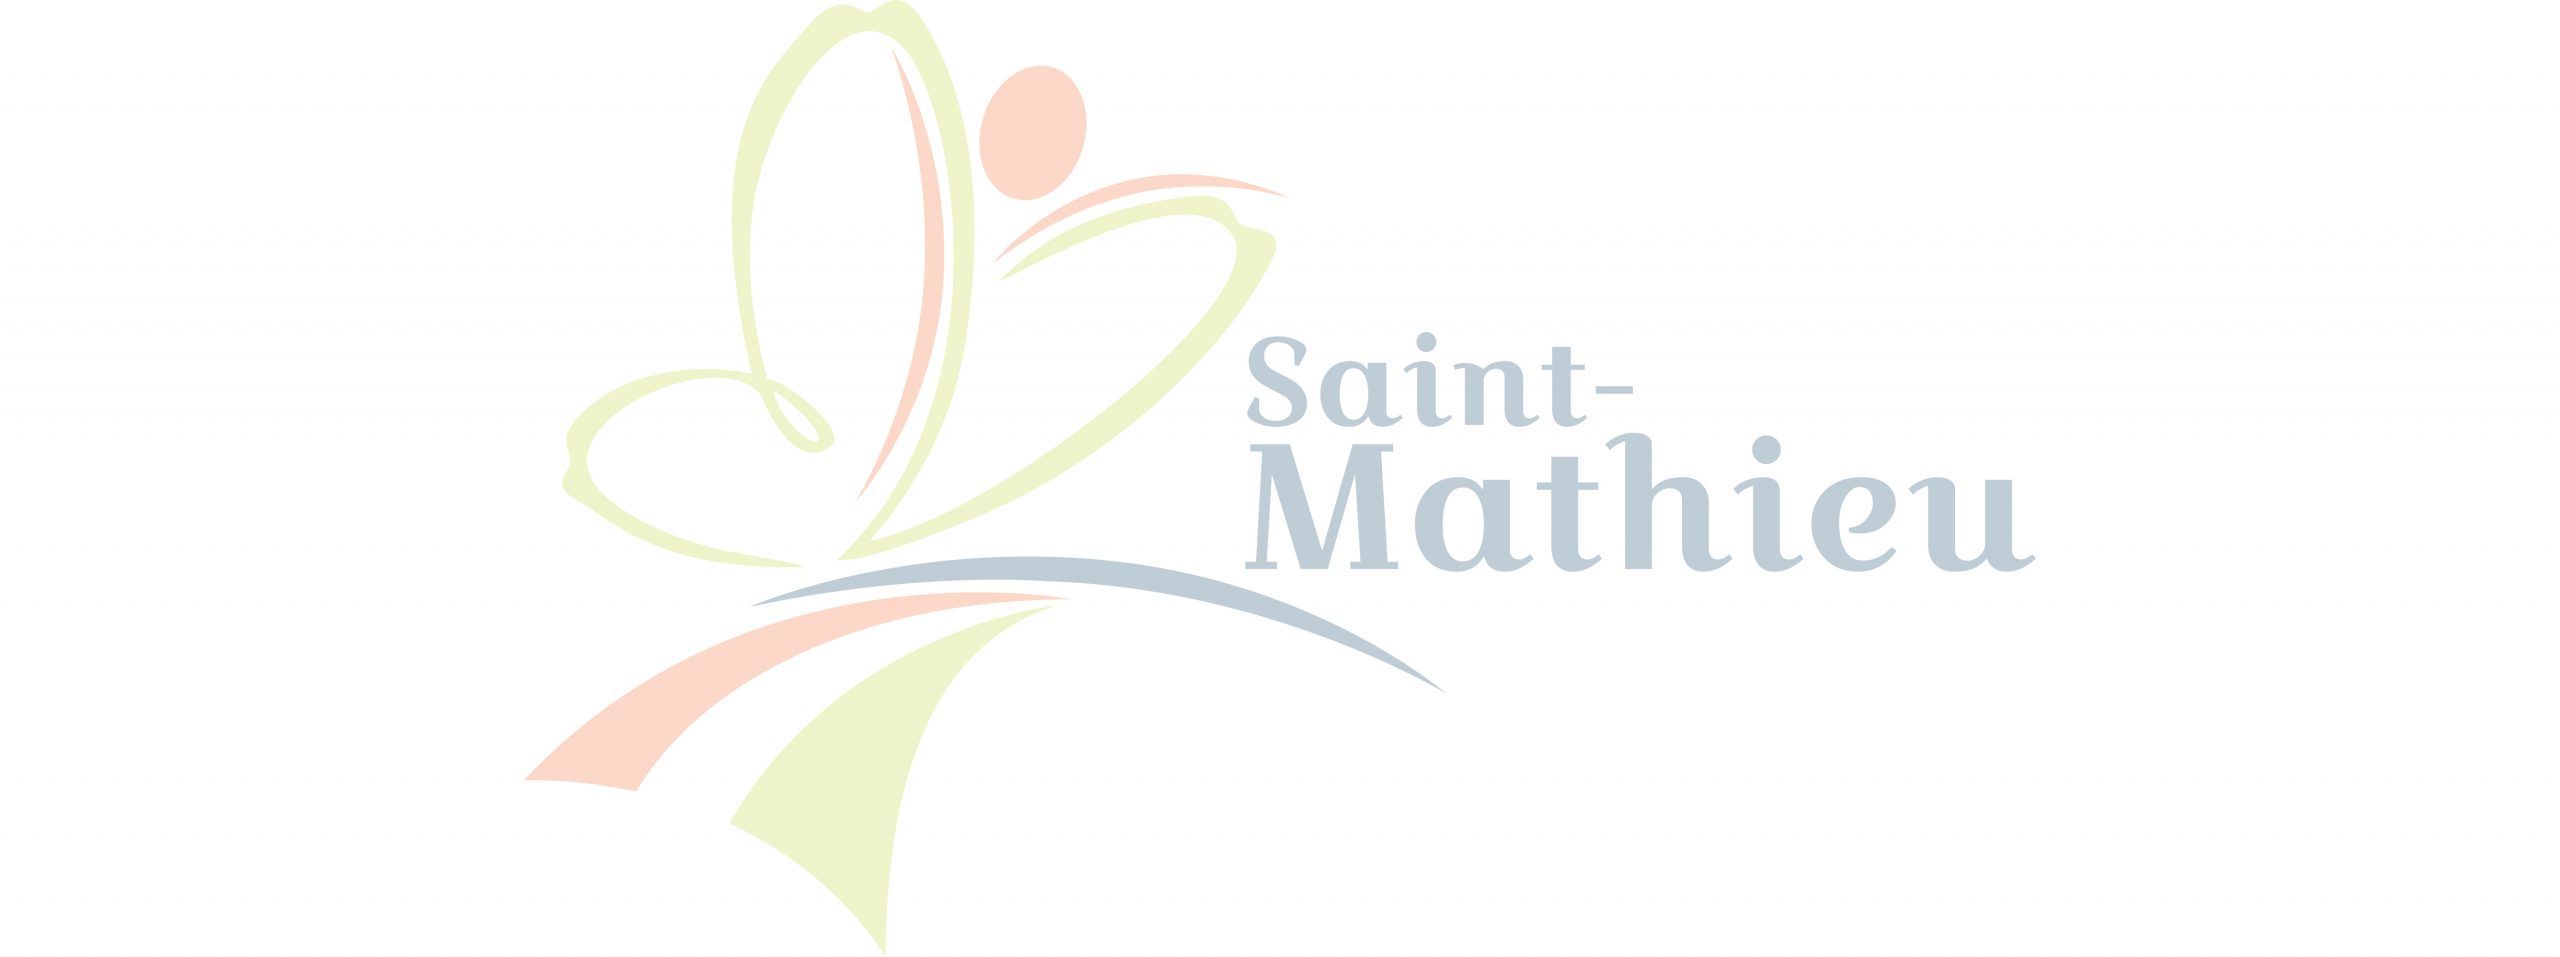 Événements Saint-Mathieu